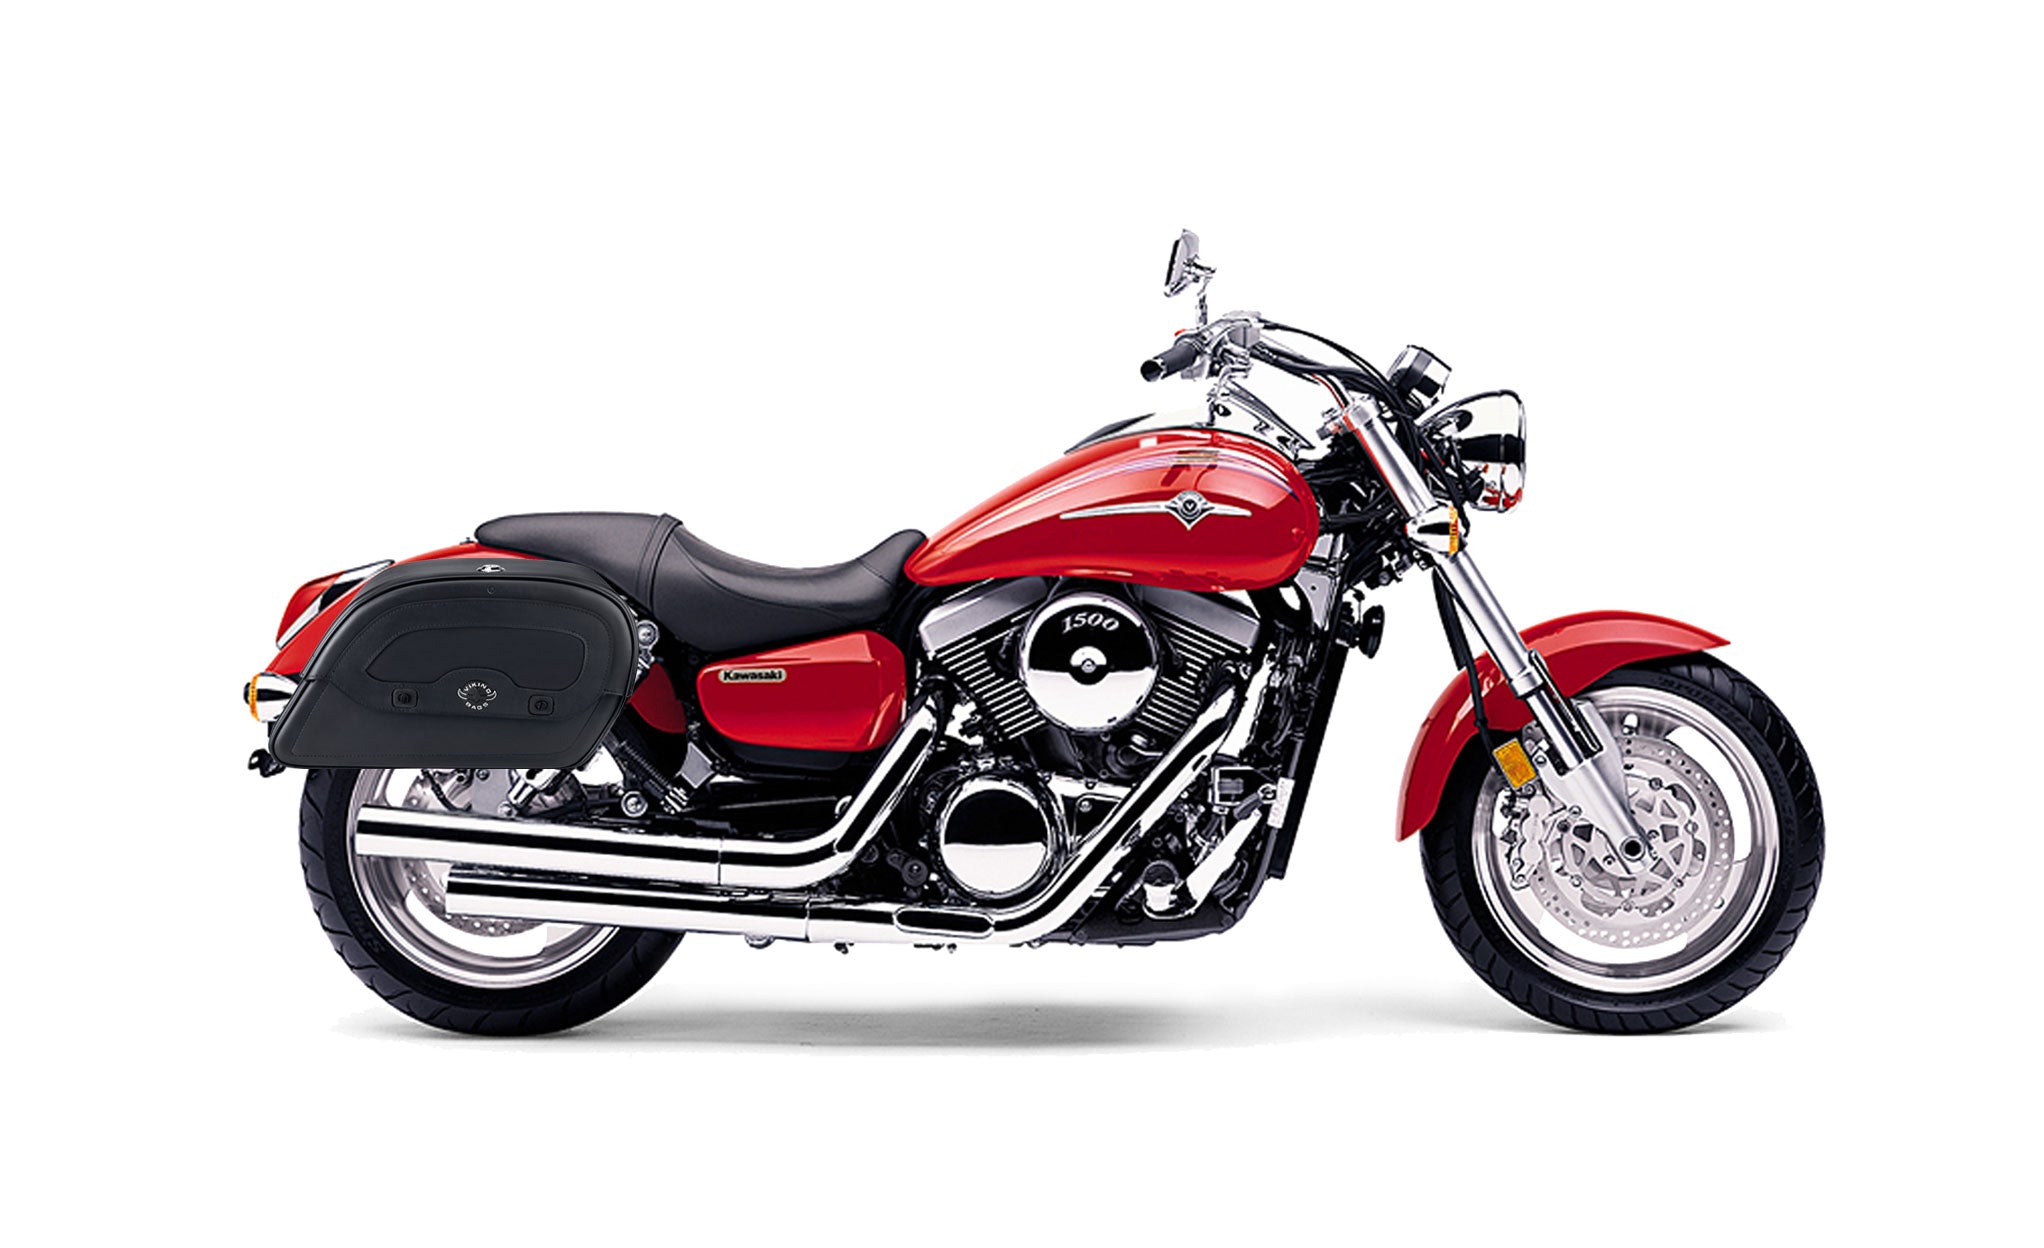 Viking Warrior Medium Kawasaki Mean Streak 1500 Leather Motorcycle Saddlebags on Bike Photo @expand